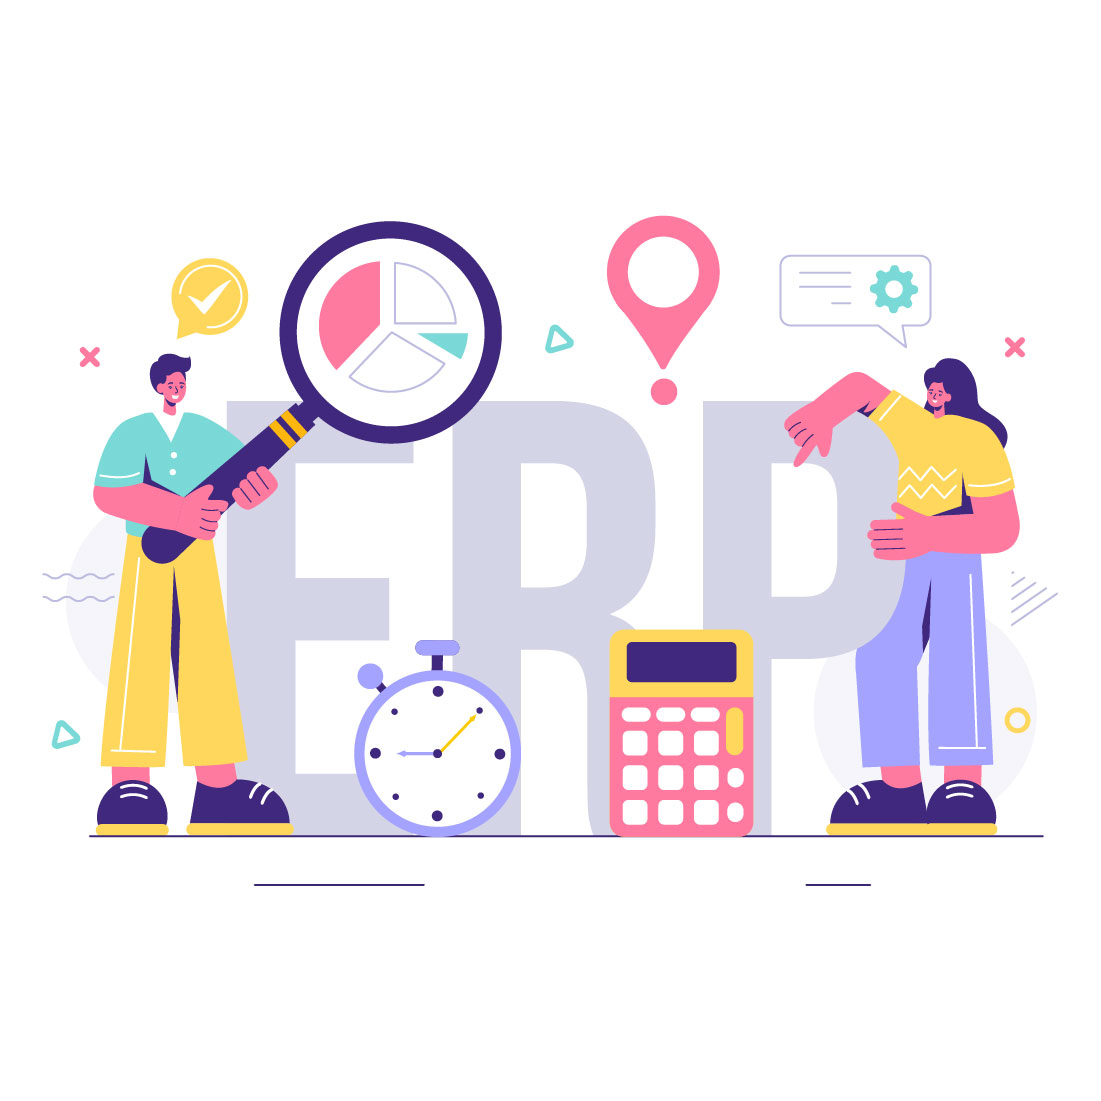 10 ERP Enterprise Resource Planning System Illustration preview image.